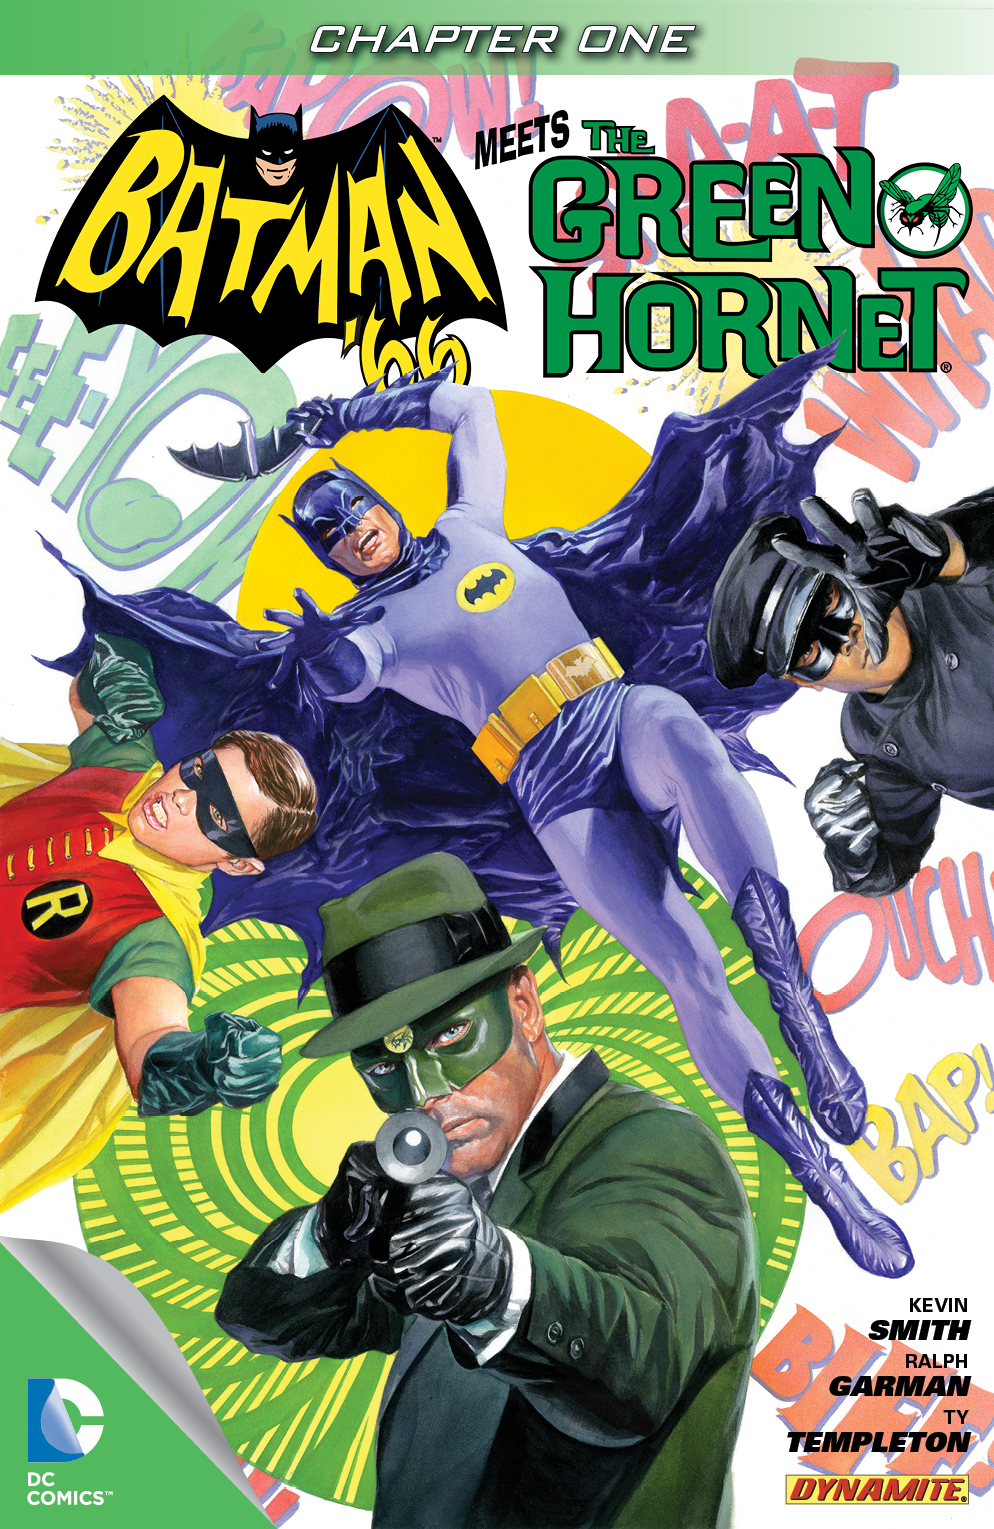 Batman '66 Meets the Green Hornet #2 preview images